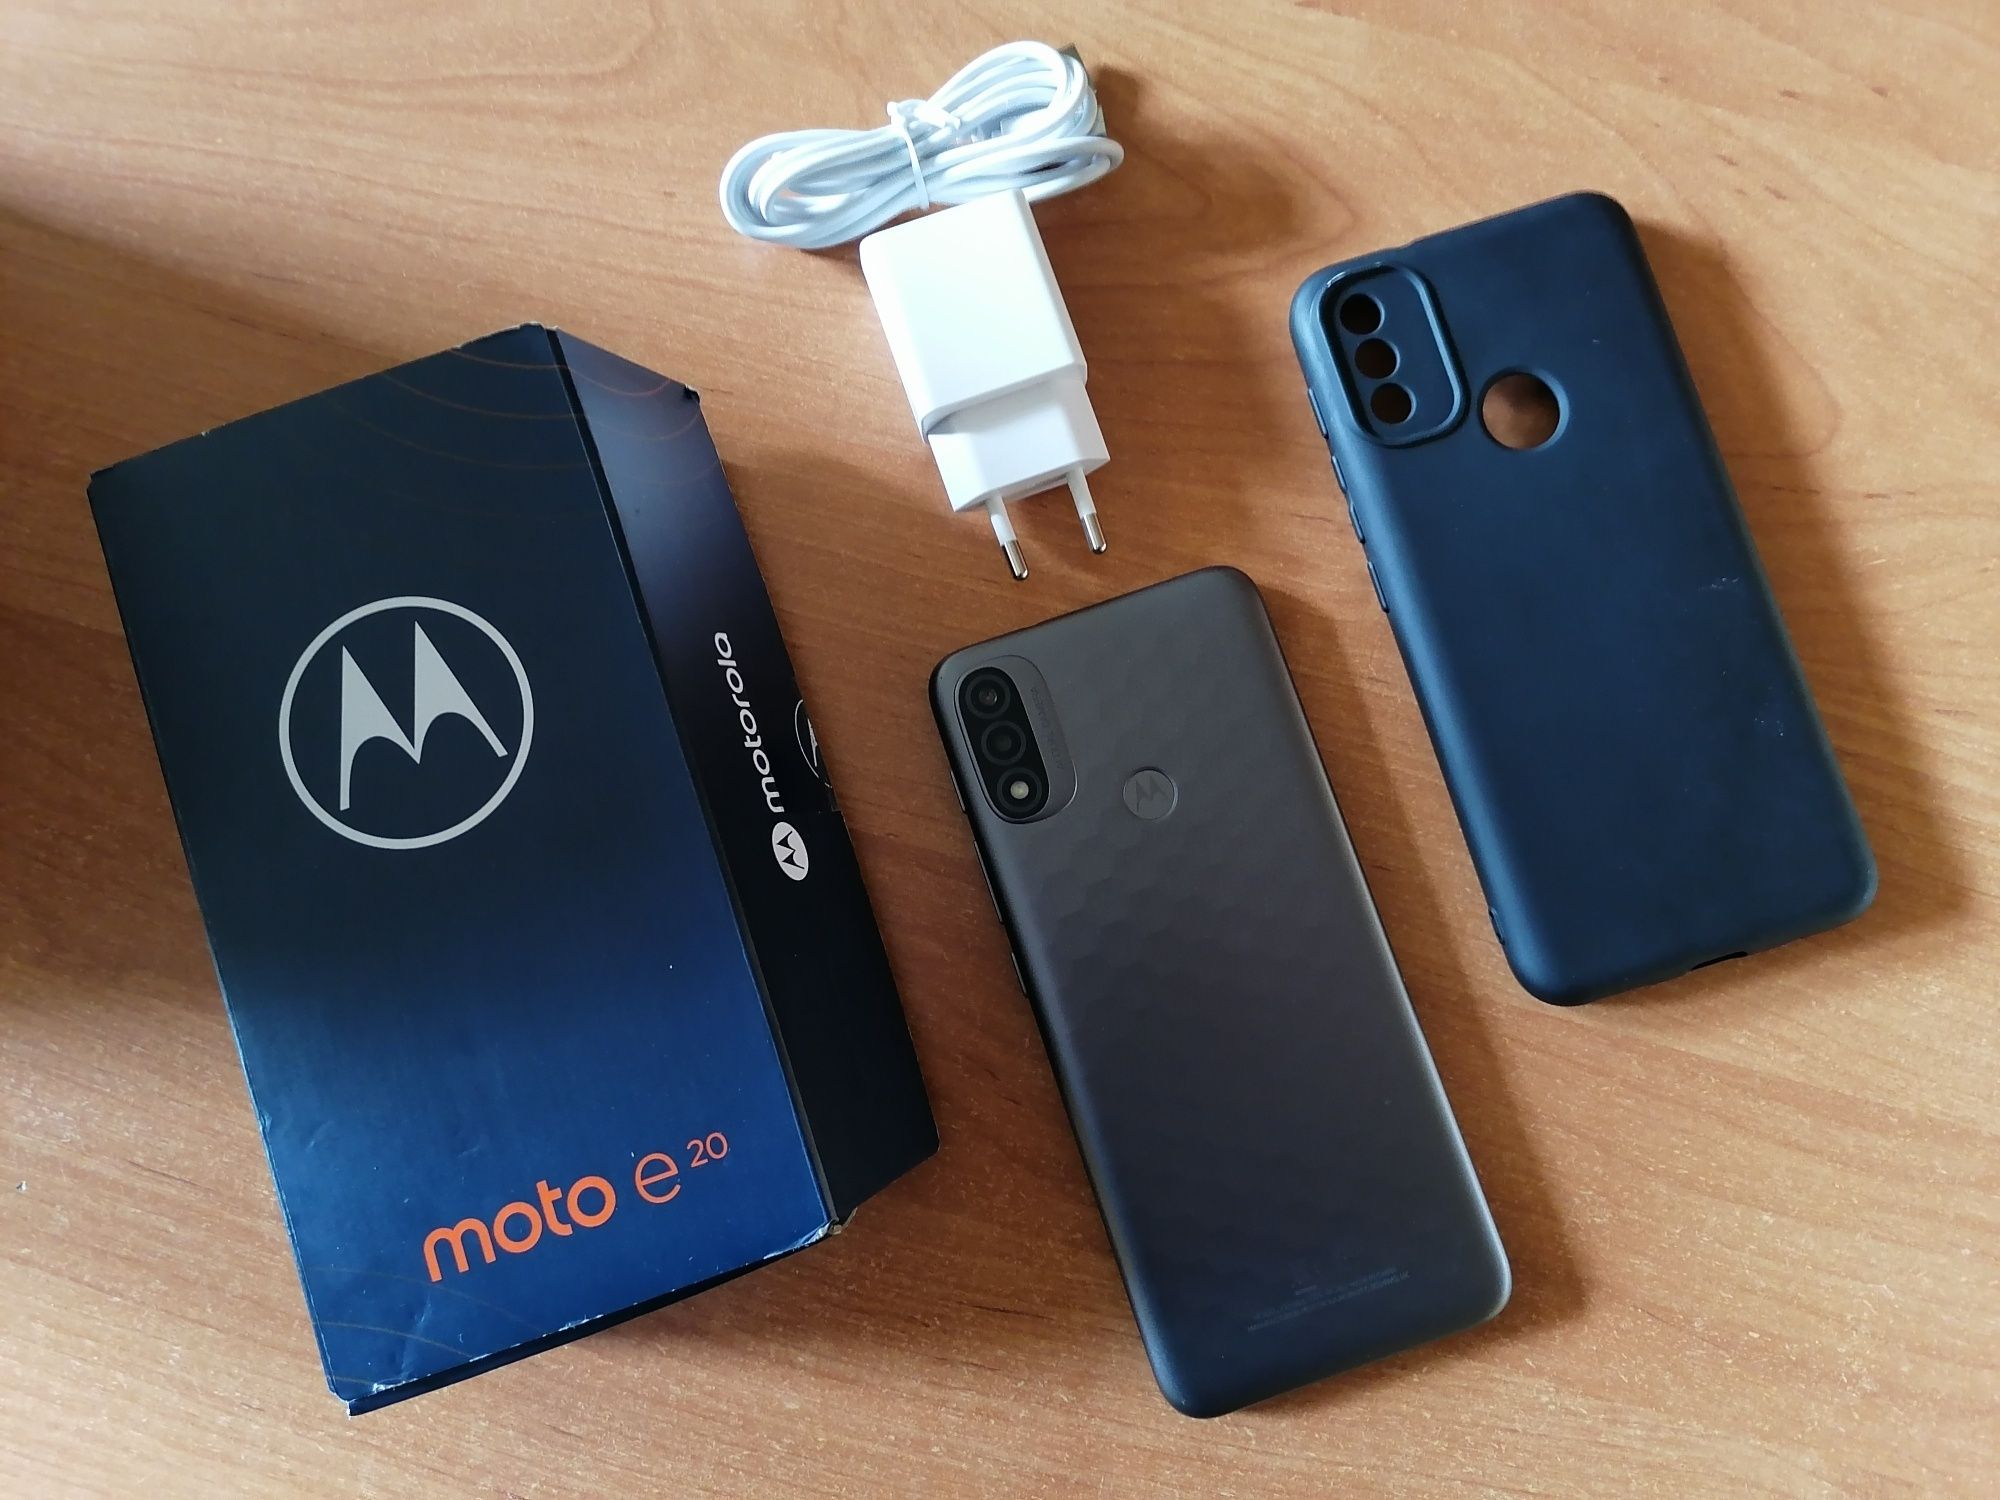 Motorola e20 z Ekranem 6,5 Cala i Pamięcią 32/2GB + Etui GRATIS